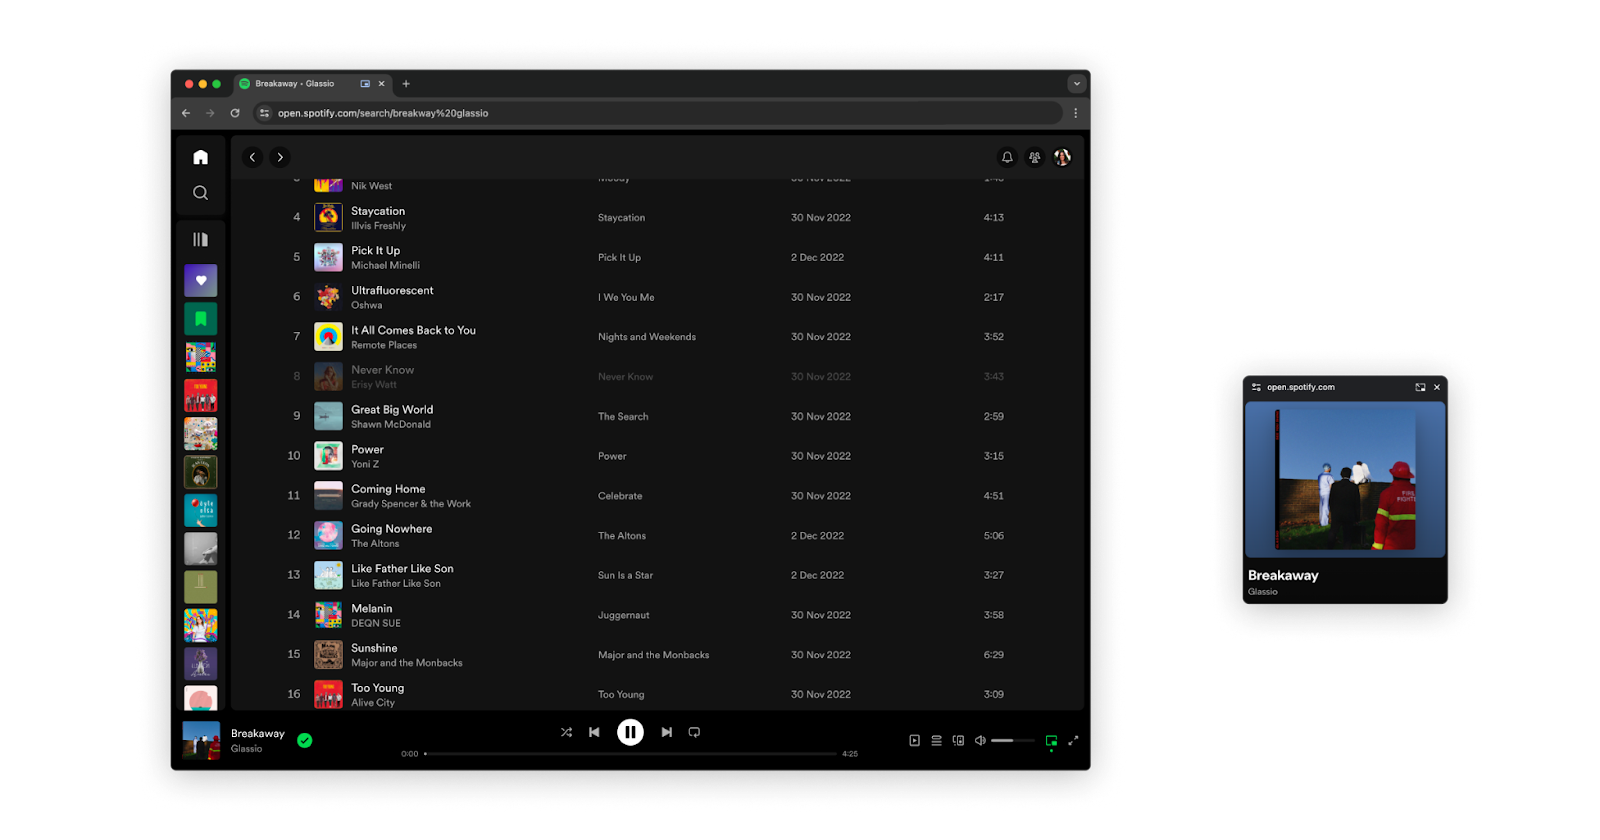 Captura de pantalla de la nueva ventana del Reproductor en miniatura de Spotify.